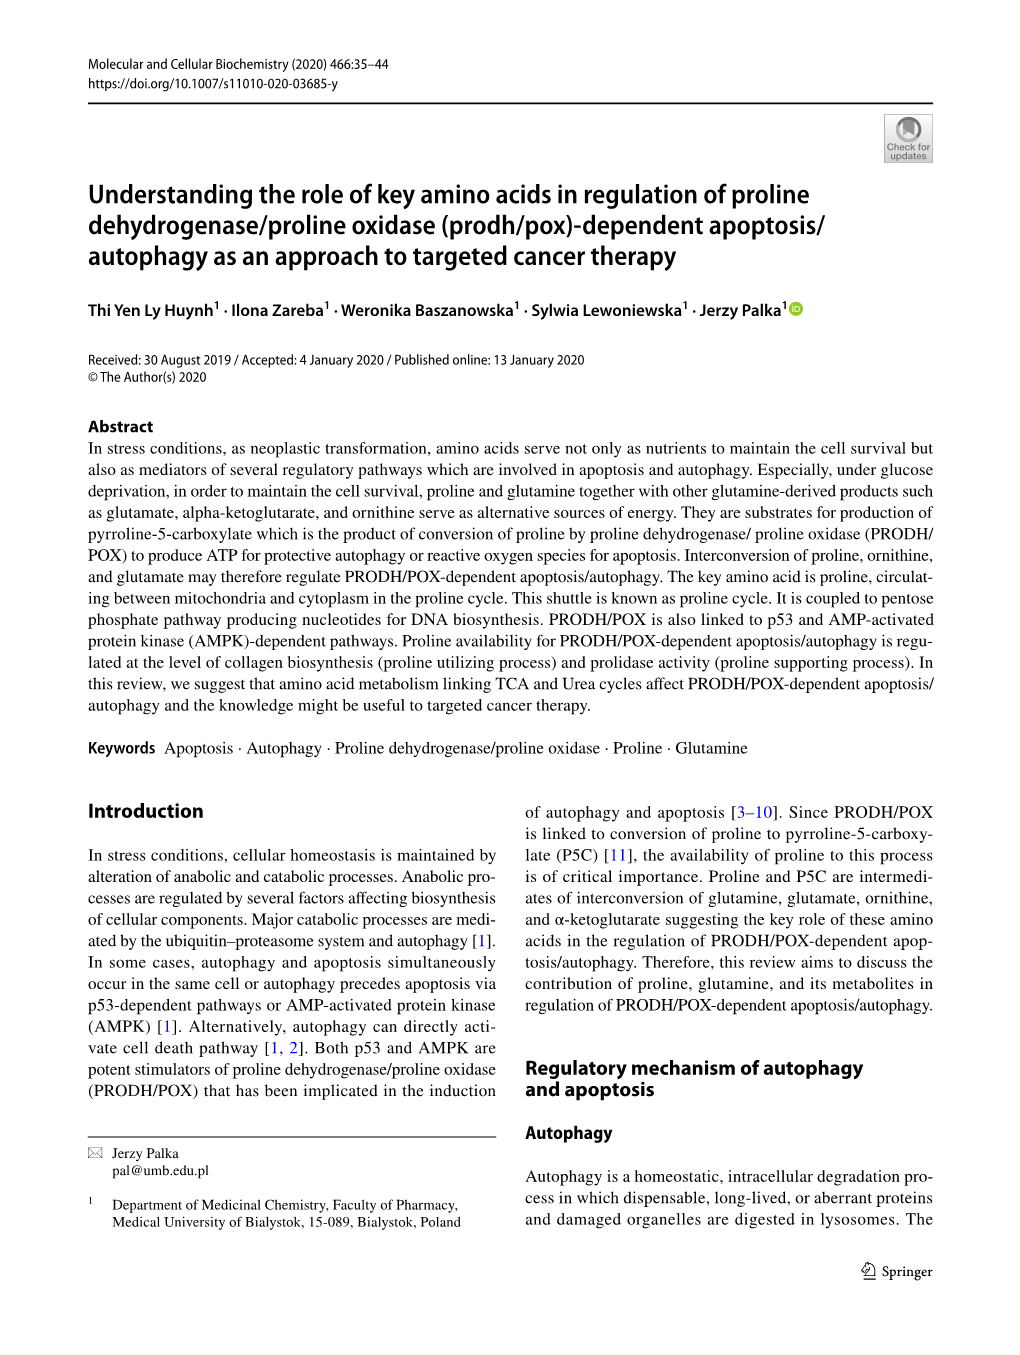 Understanding the Role of Key Amino Acids in Regulation of Proline Dehydrogenase/Proline Oxidase (Prodh/Pox)-Dependent Apoptosis